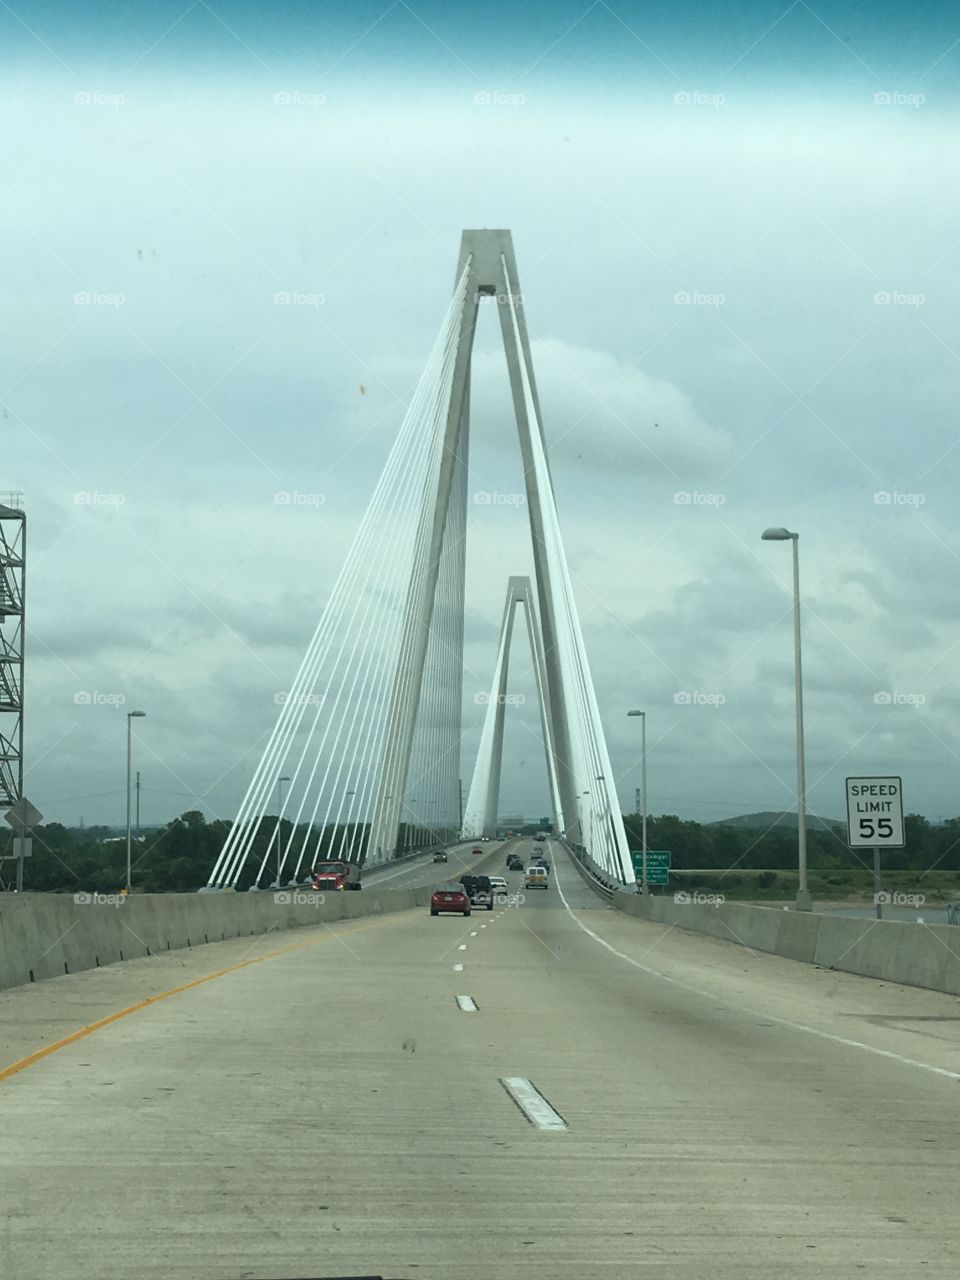 St. Louis bridge